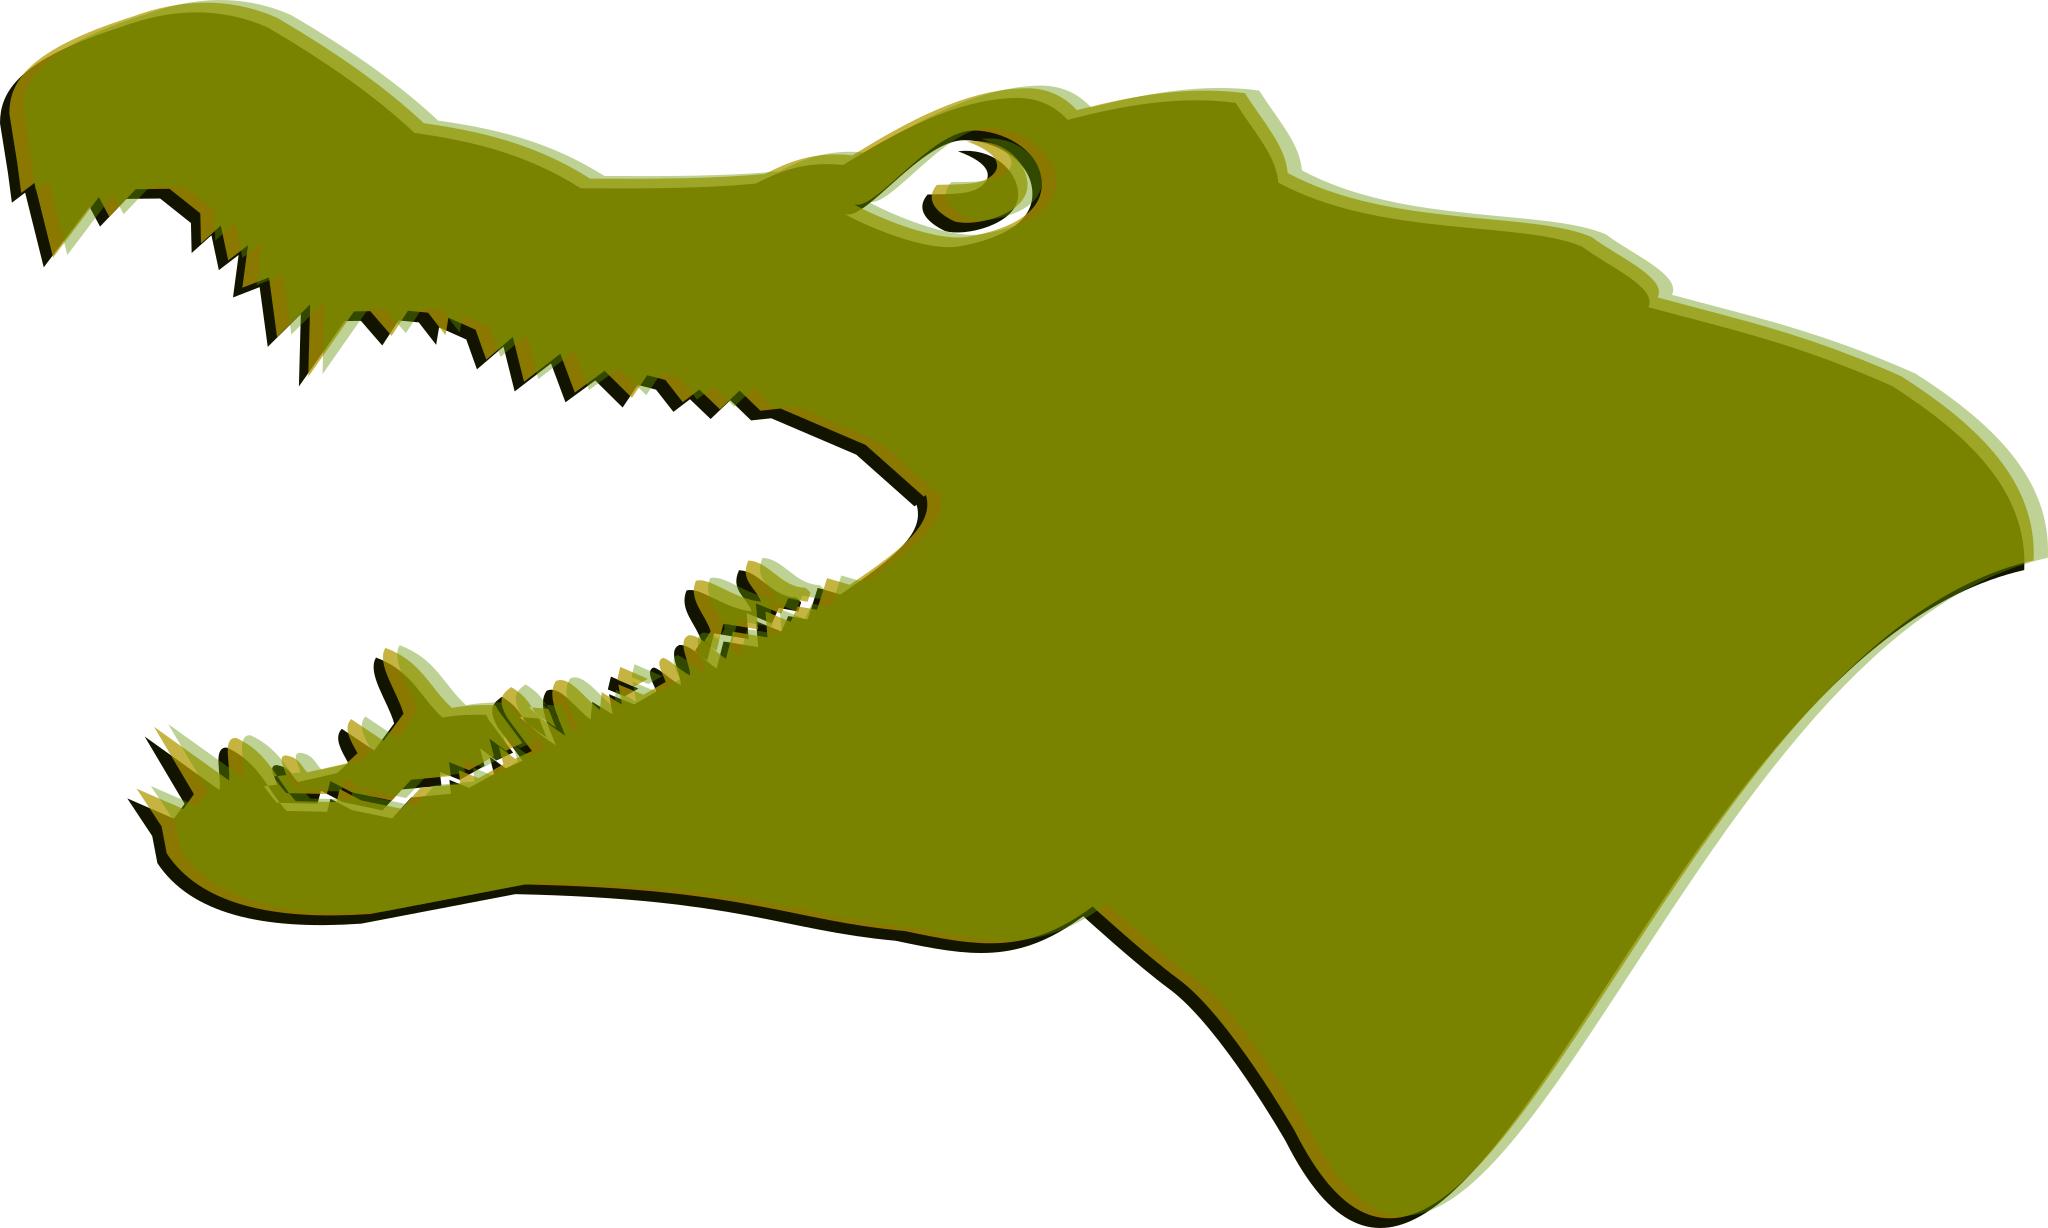 Почему крокодил гена аллигатор